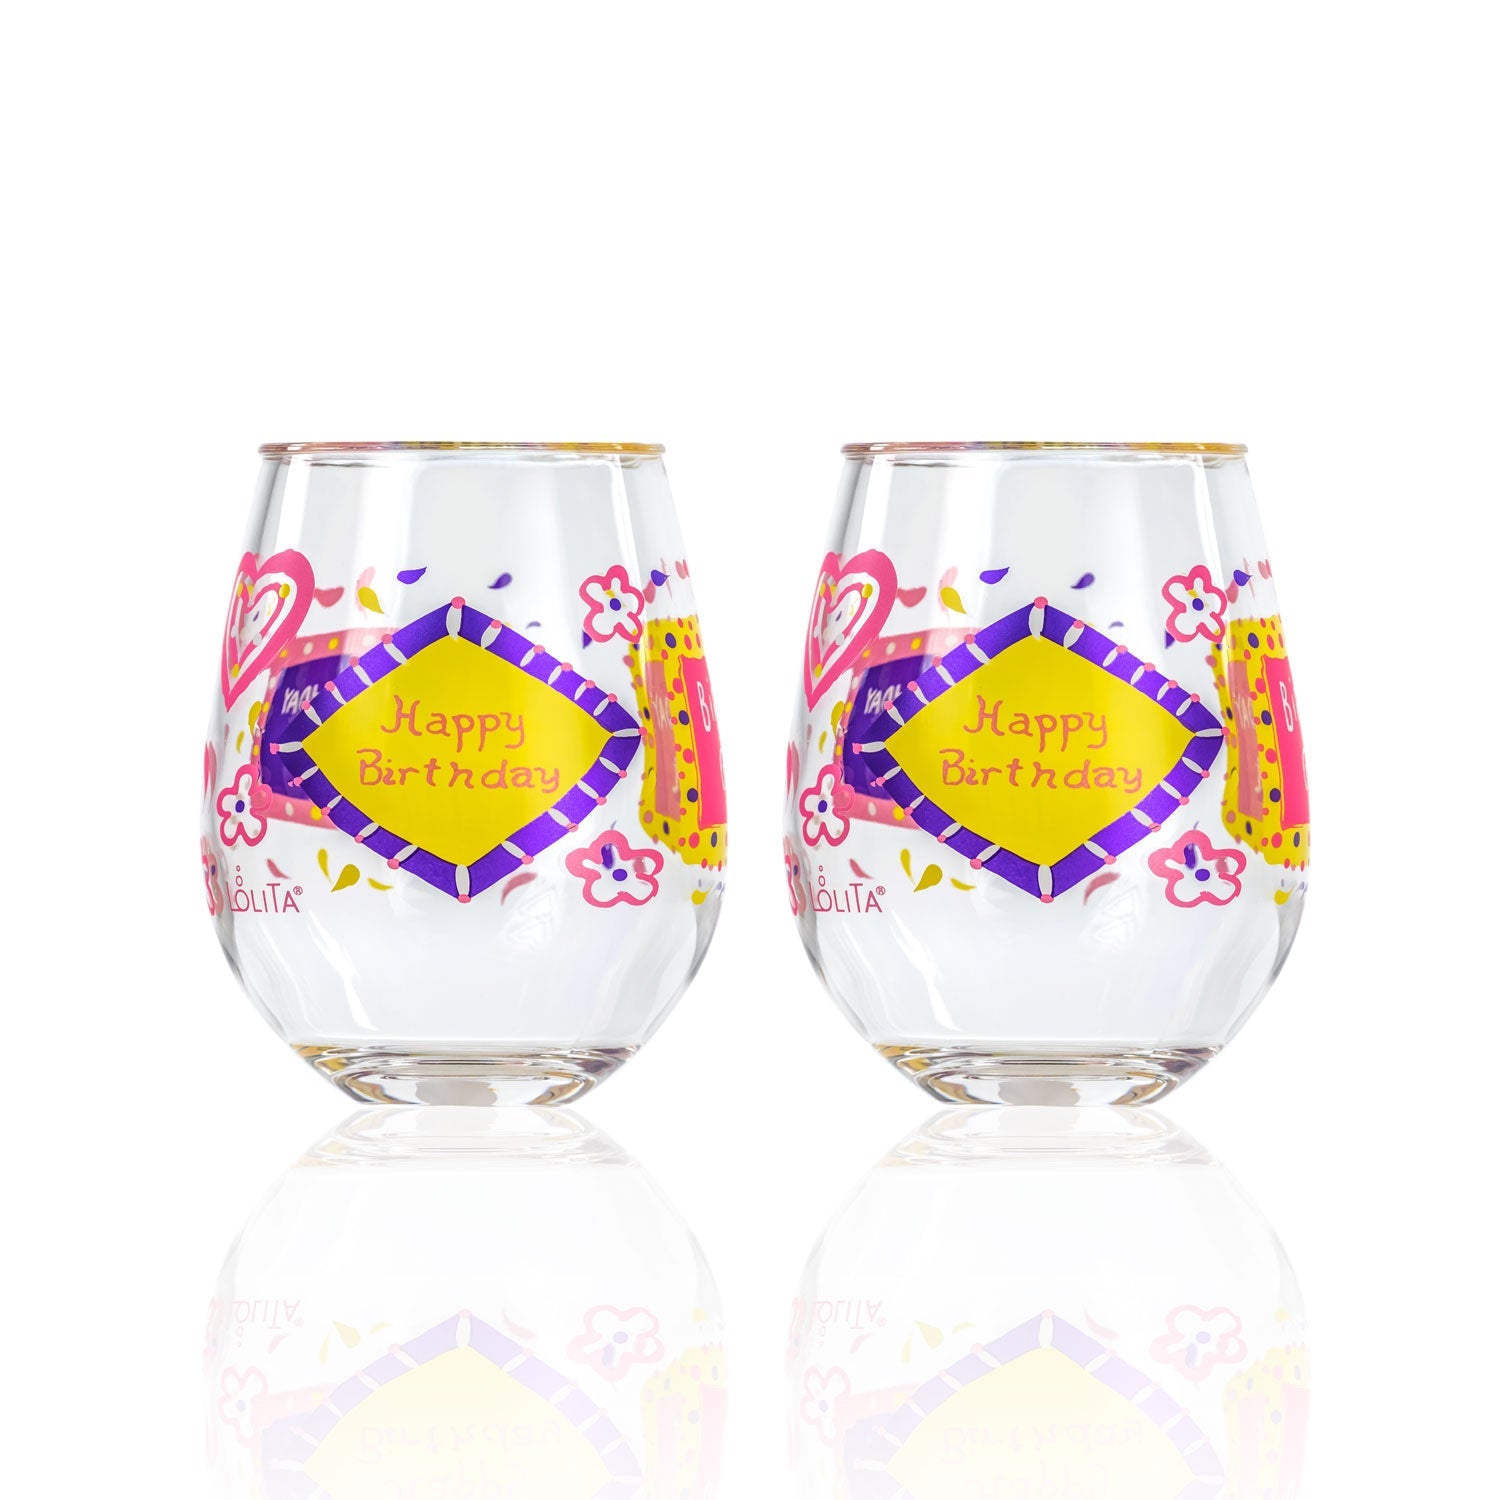 Lolita Coastal Shell 15oz Stemless Wine Glasses - Set of 2 – Indigo Pool  Patio BBQ